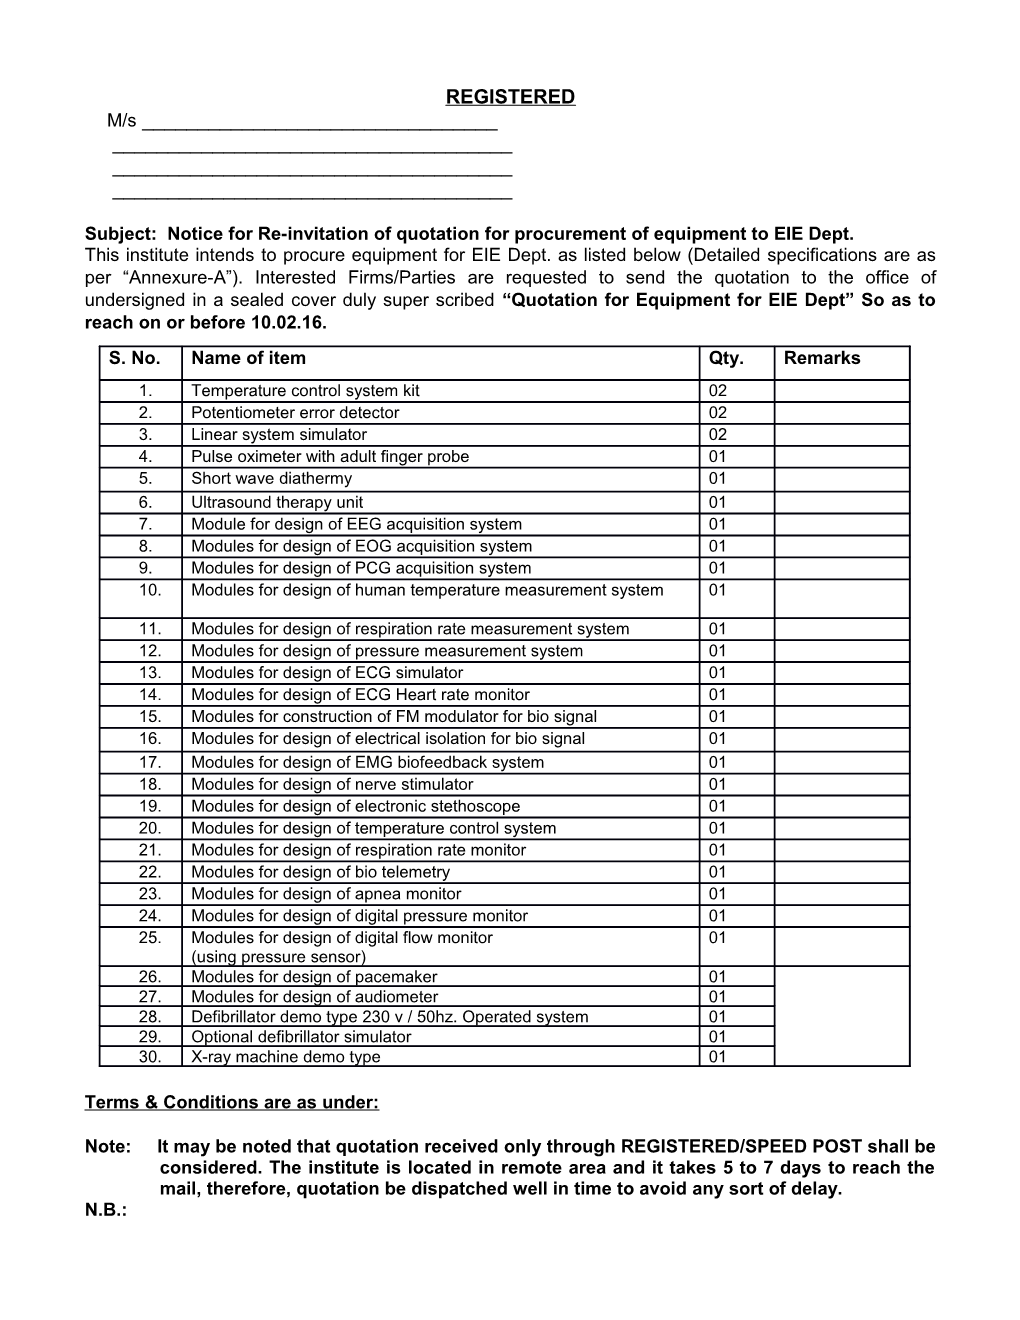 Subject: Noticefor Re-Invitation Ofquotation for Procurement of Equipment to EIE Dept